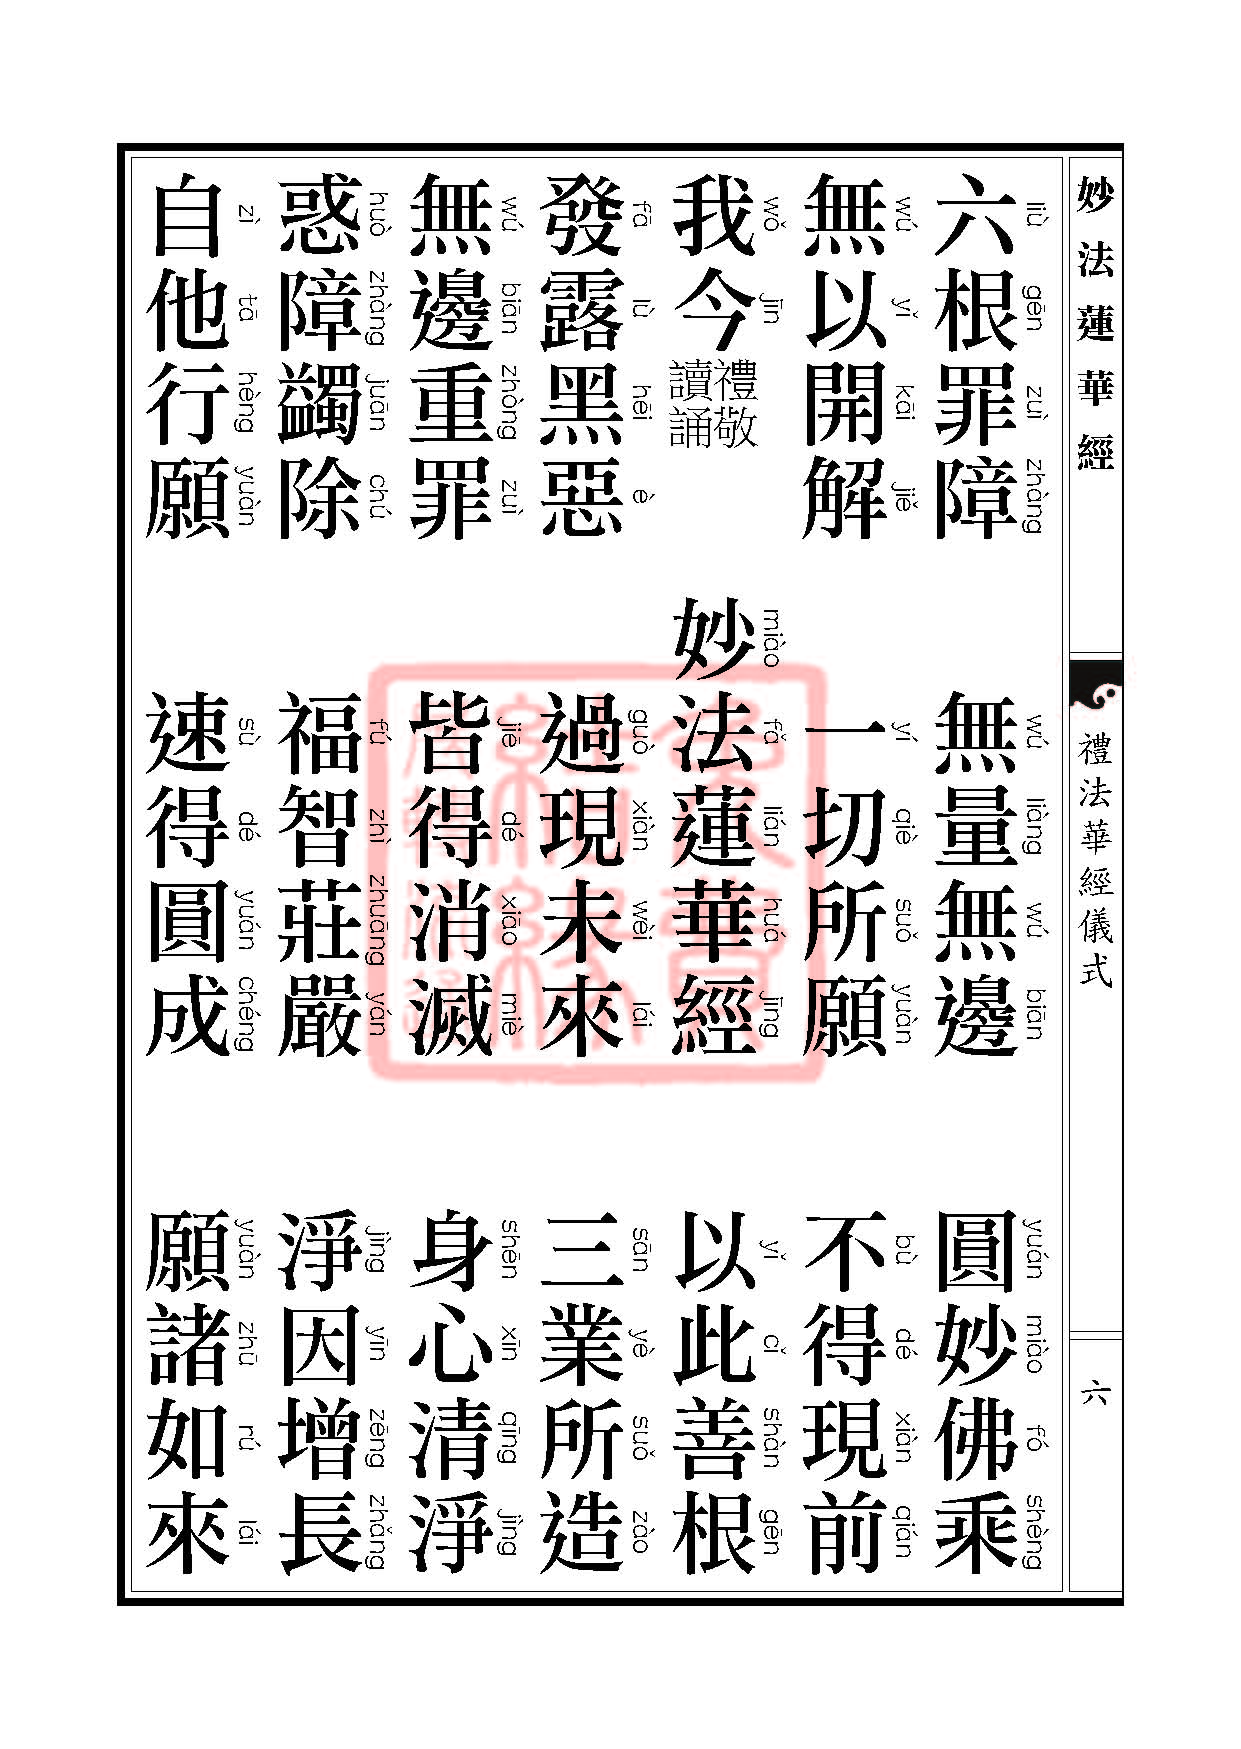 Book_FHJ_HK-A6-PY_Web_页面_006.jpg